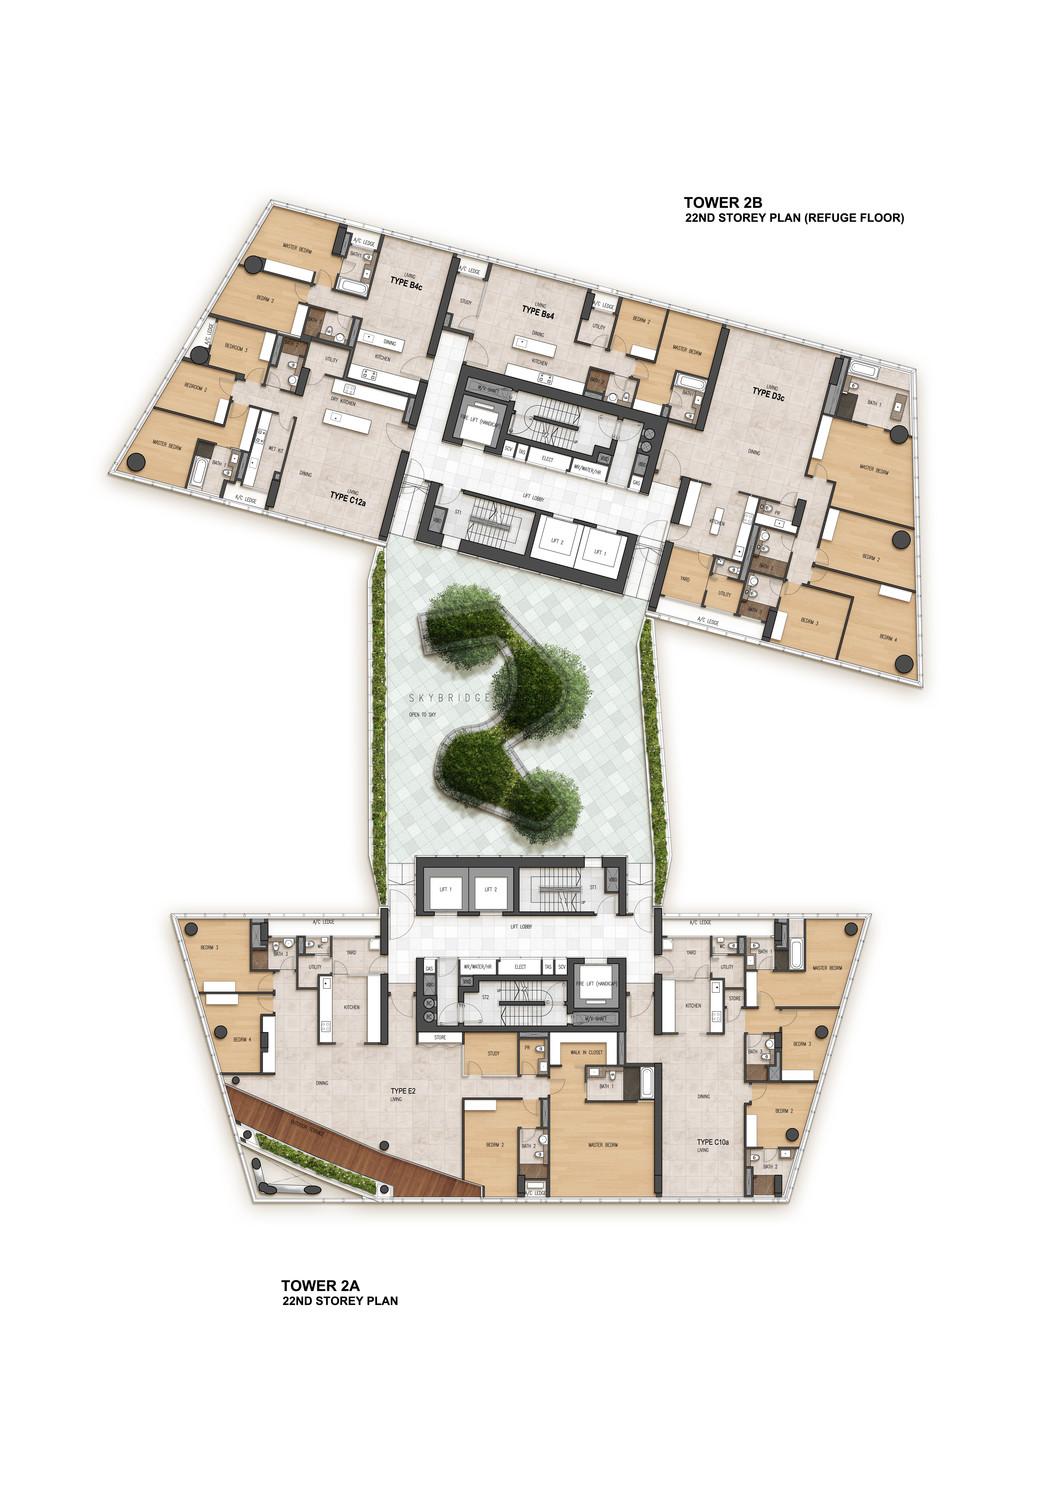 Rendering, typical tower floor layout plan